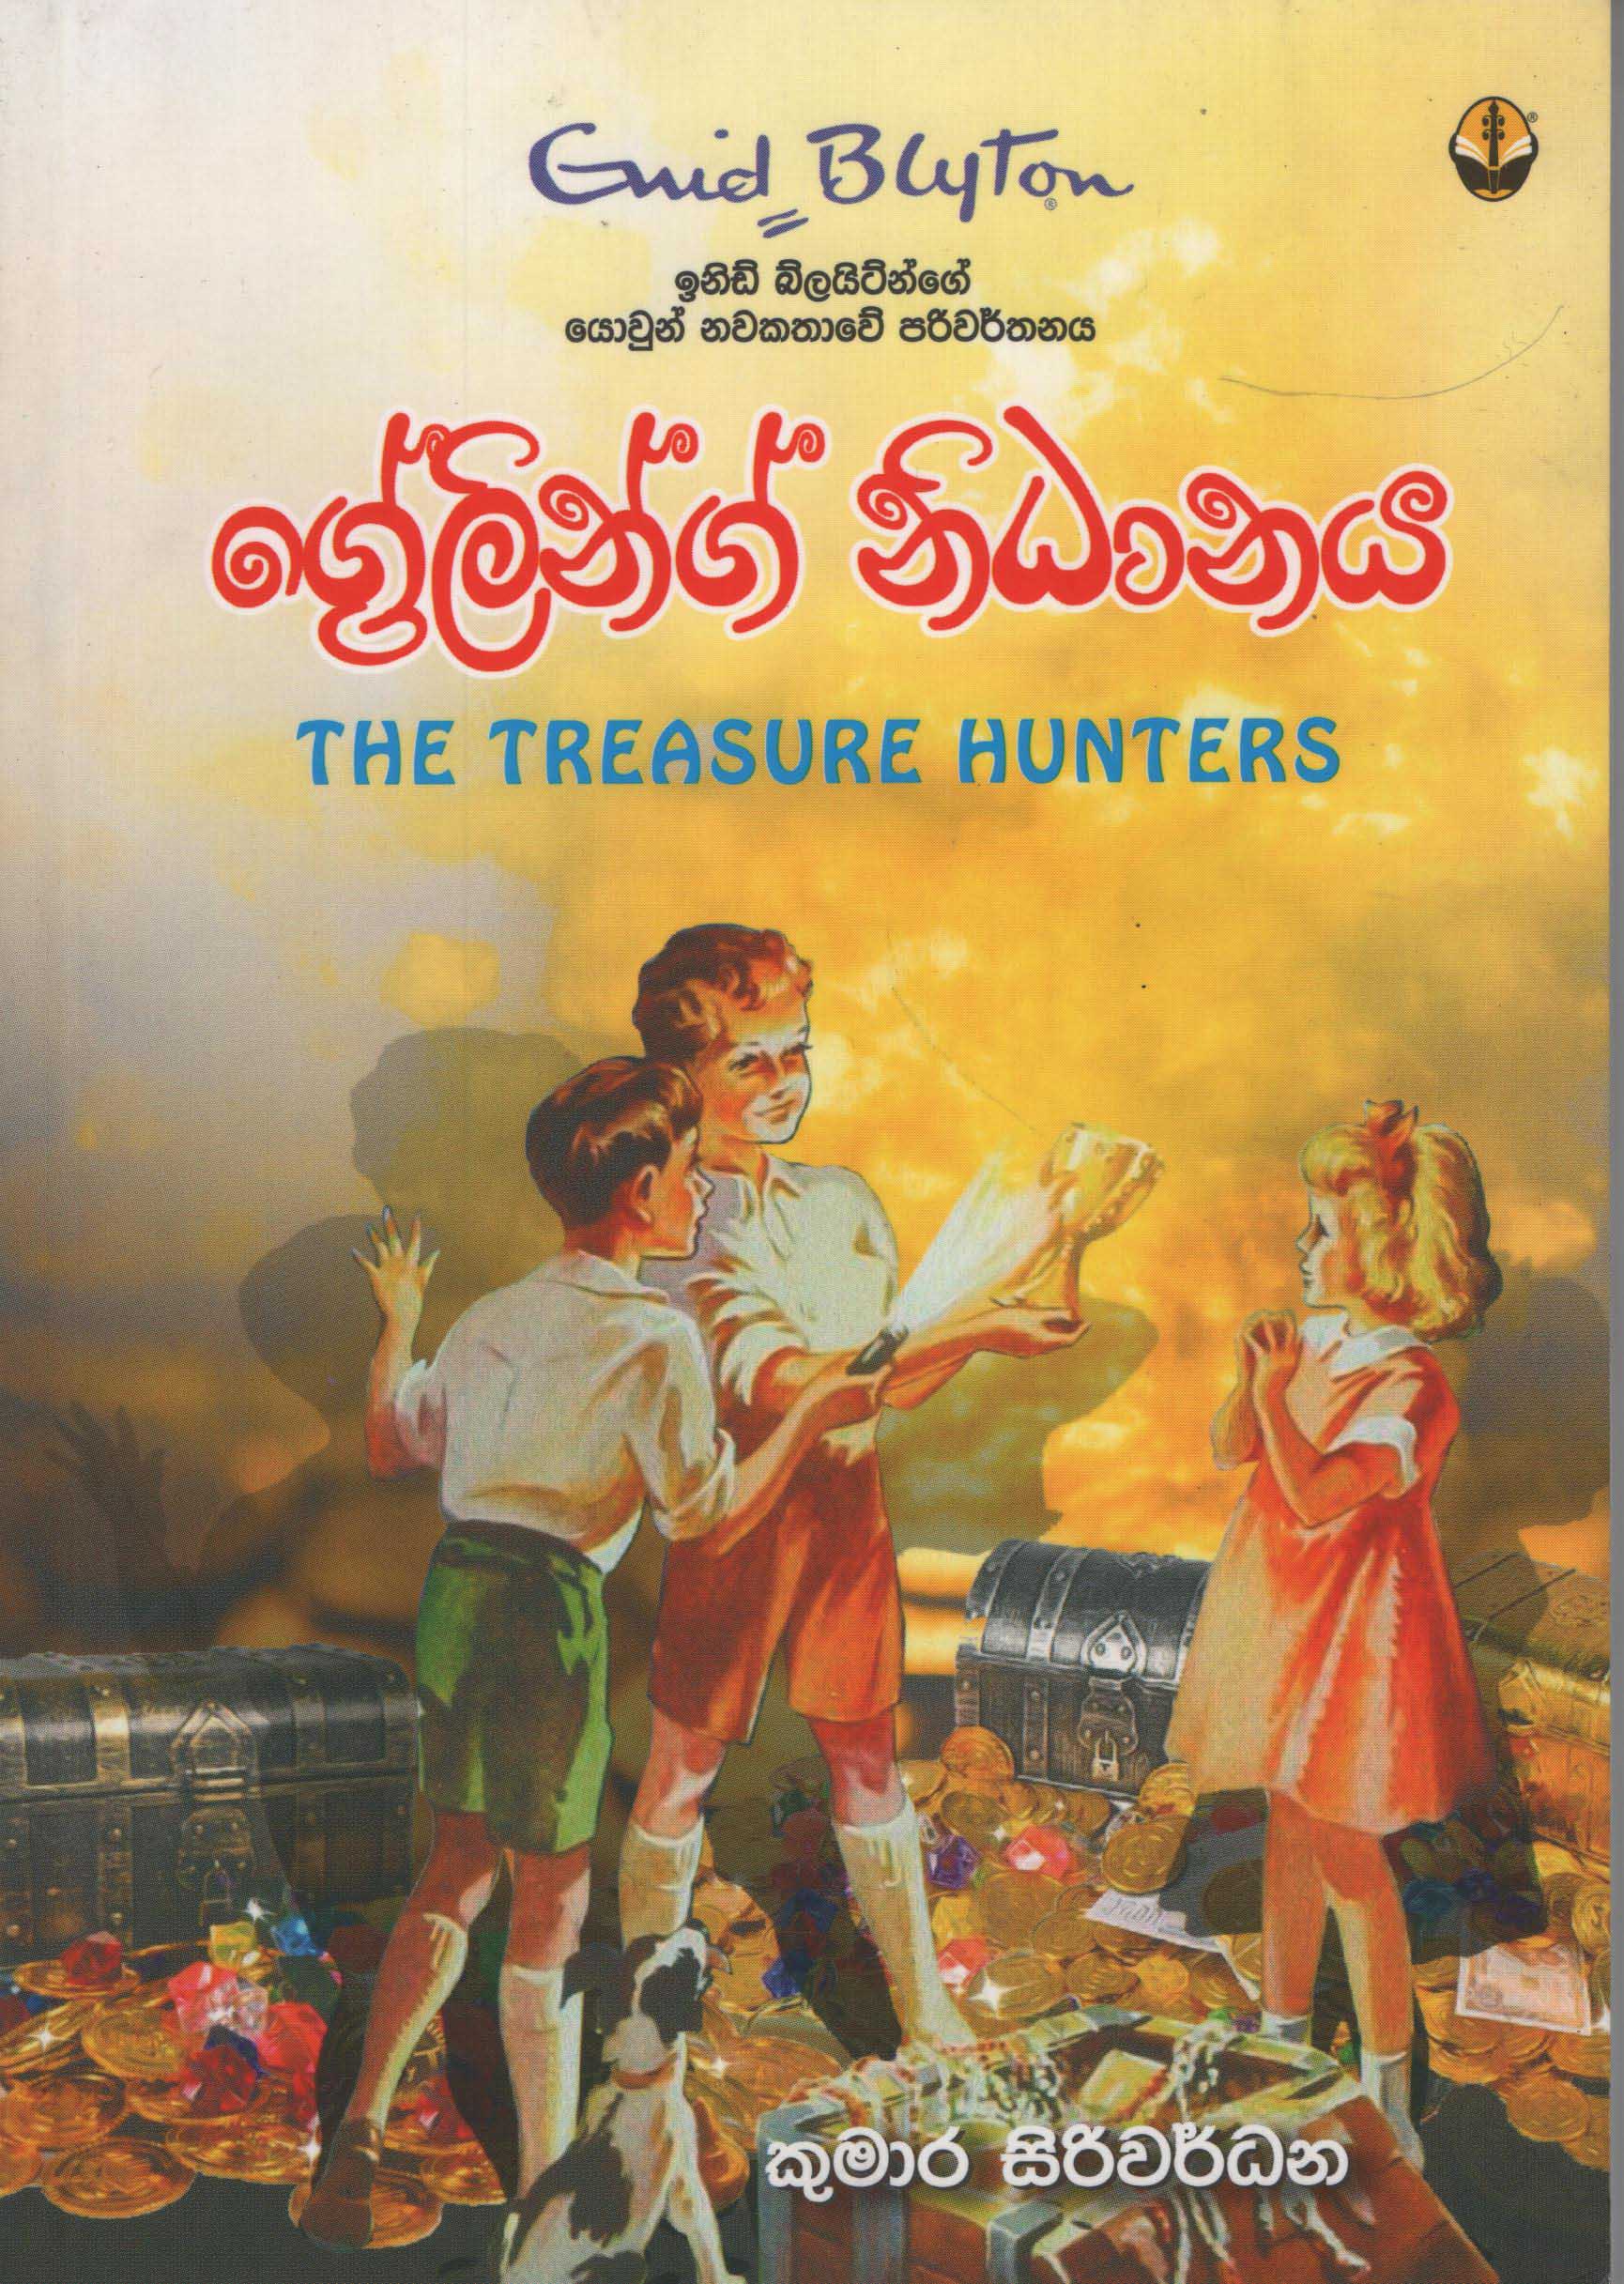 Greling Nidanaya Translation of The Treasure Hunters By Enid Blyton